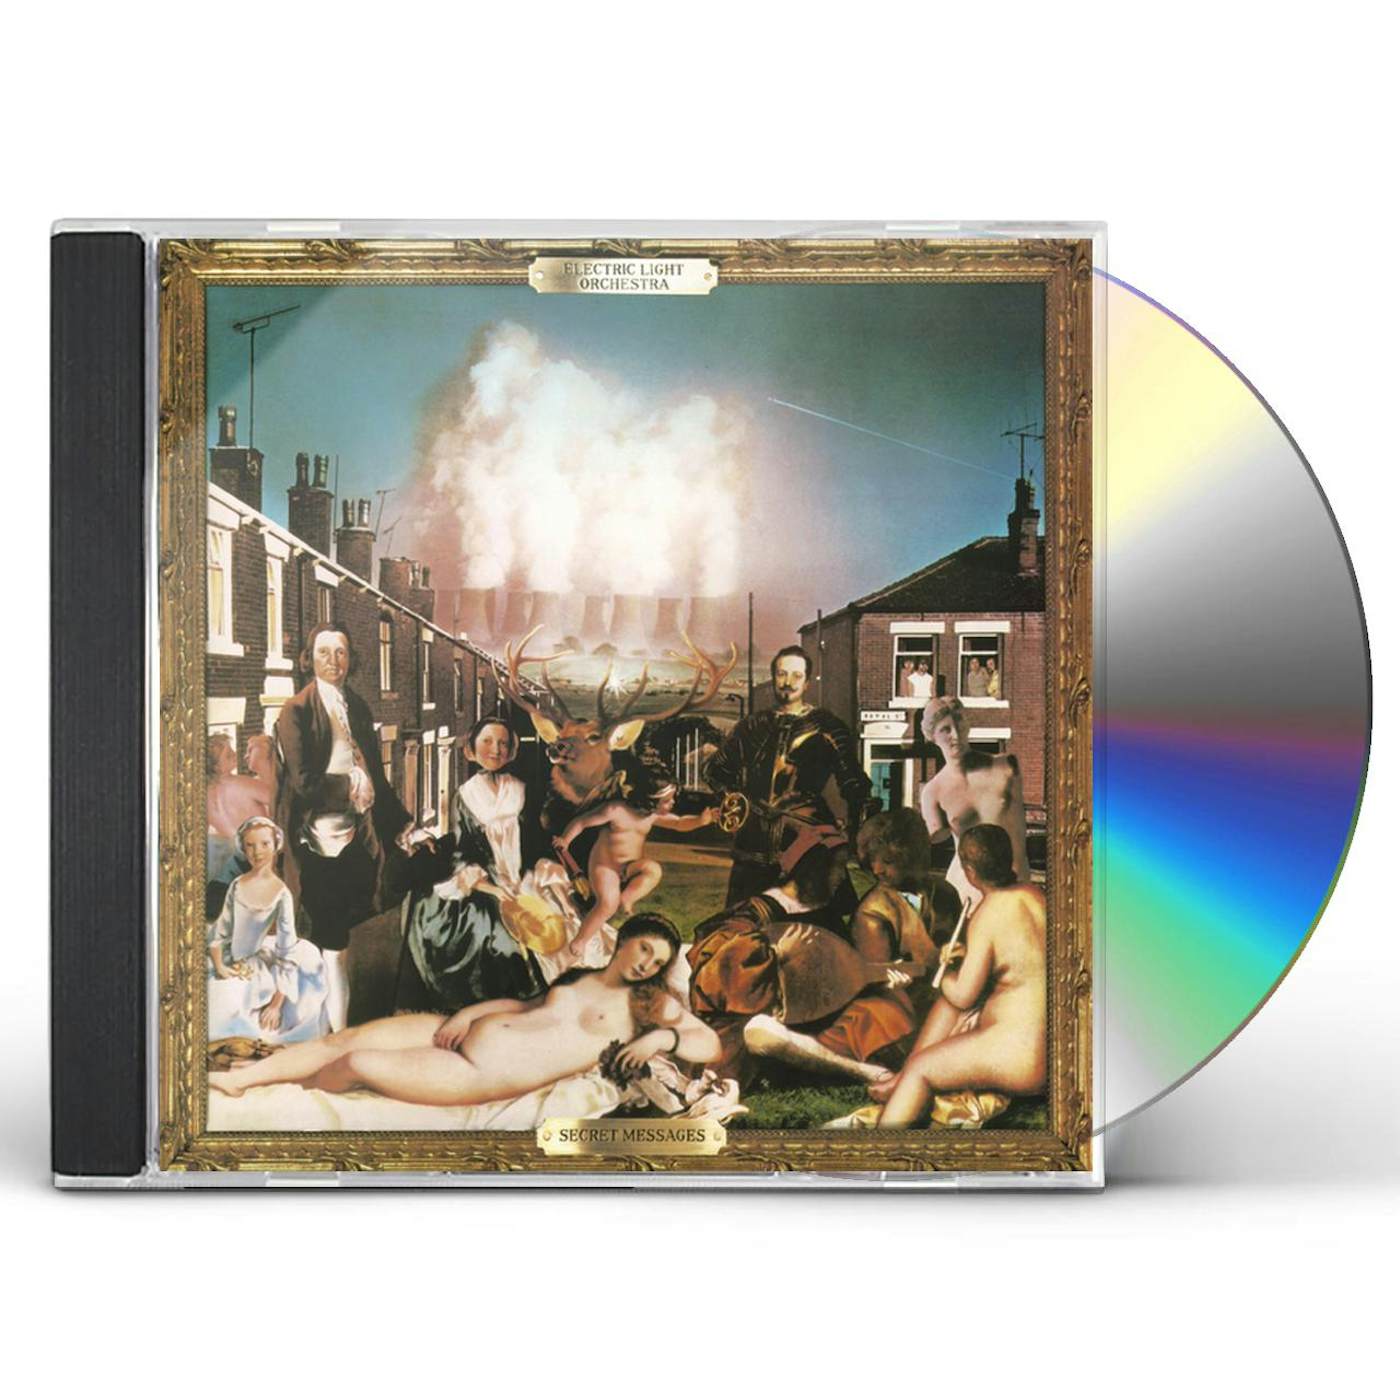 ELO (Electric Light Orchestra) SECRET MESSAGES CD